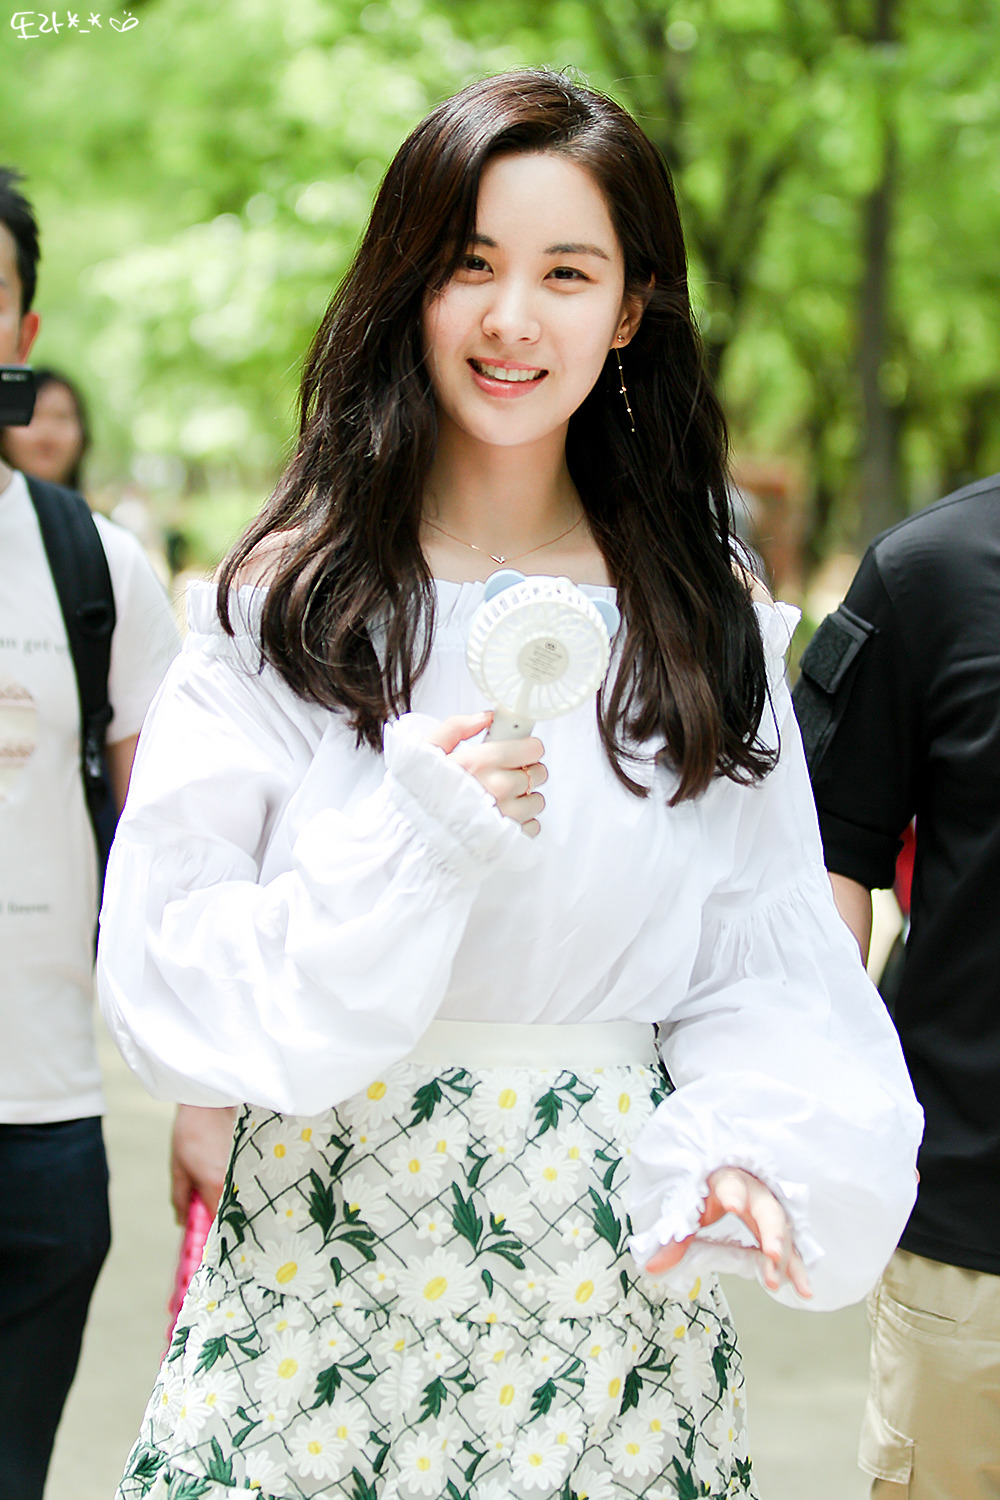  [PIC][03-06-2017]SeoHyun tham dự sự kiện “City Forestival - Maeil Duyou 'Confidence Diary'” vào chiều nay - Page 3 244EF4495937A6340D05FF